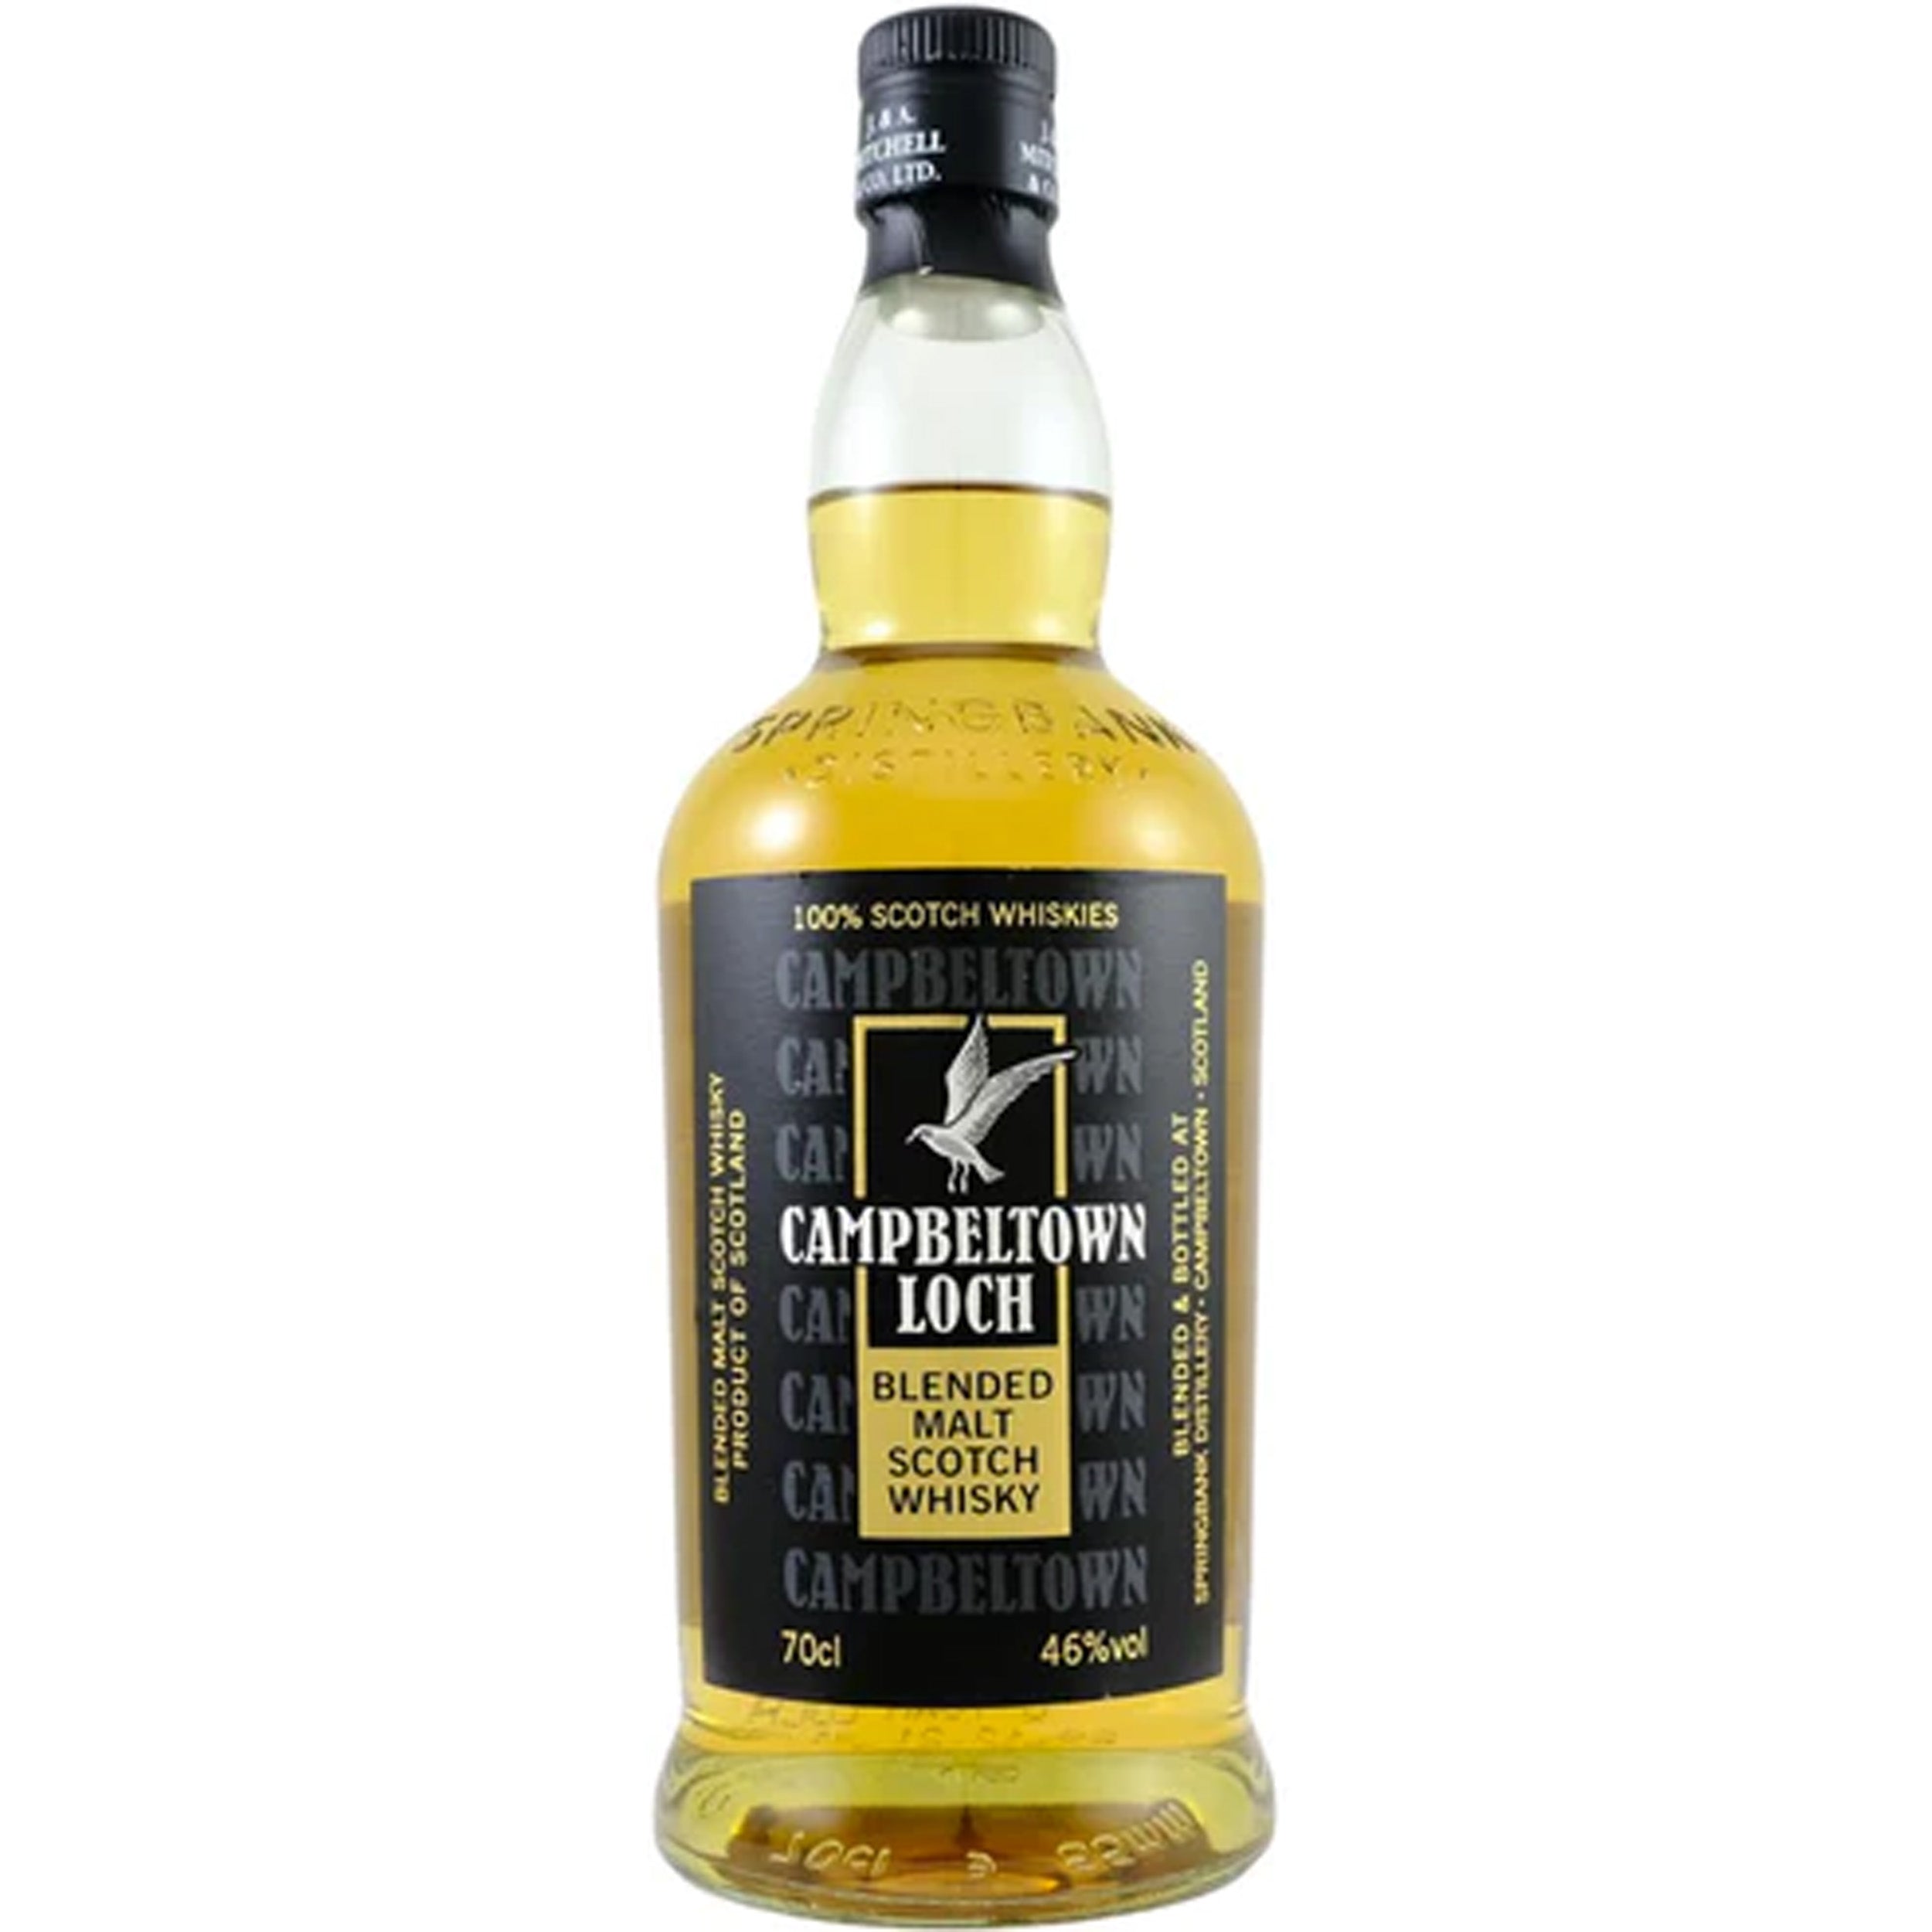 Campbeltown Loch Blended Malt Scotch – Liquor Chips Whisky